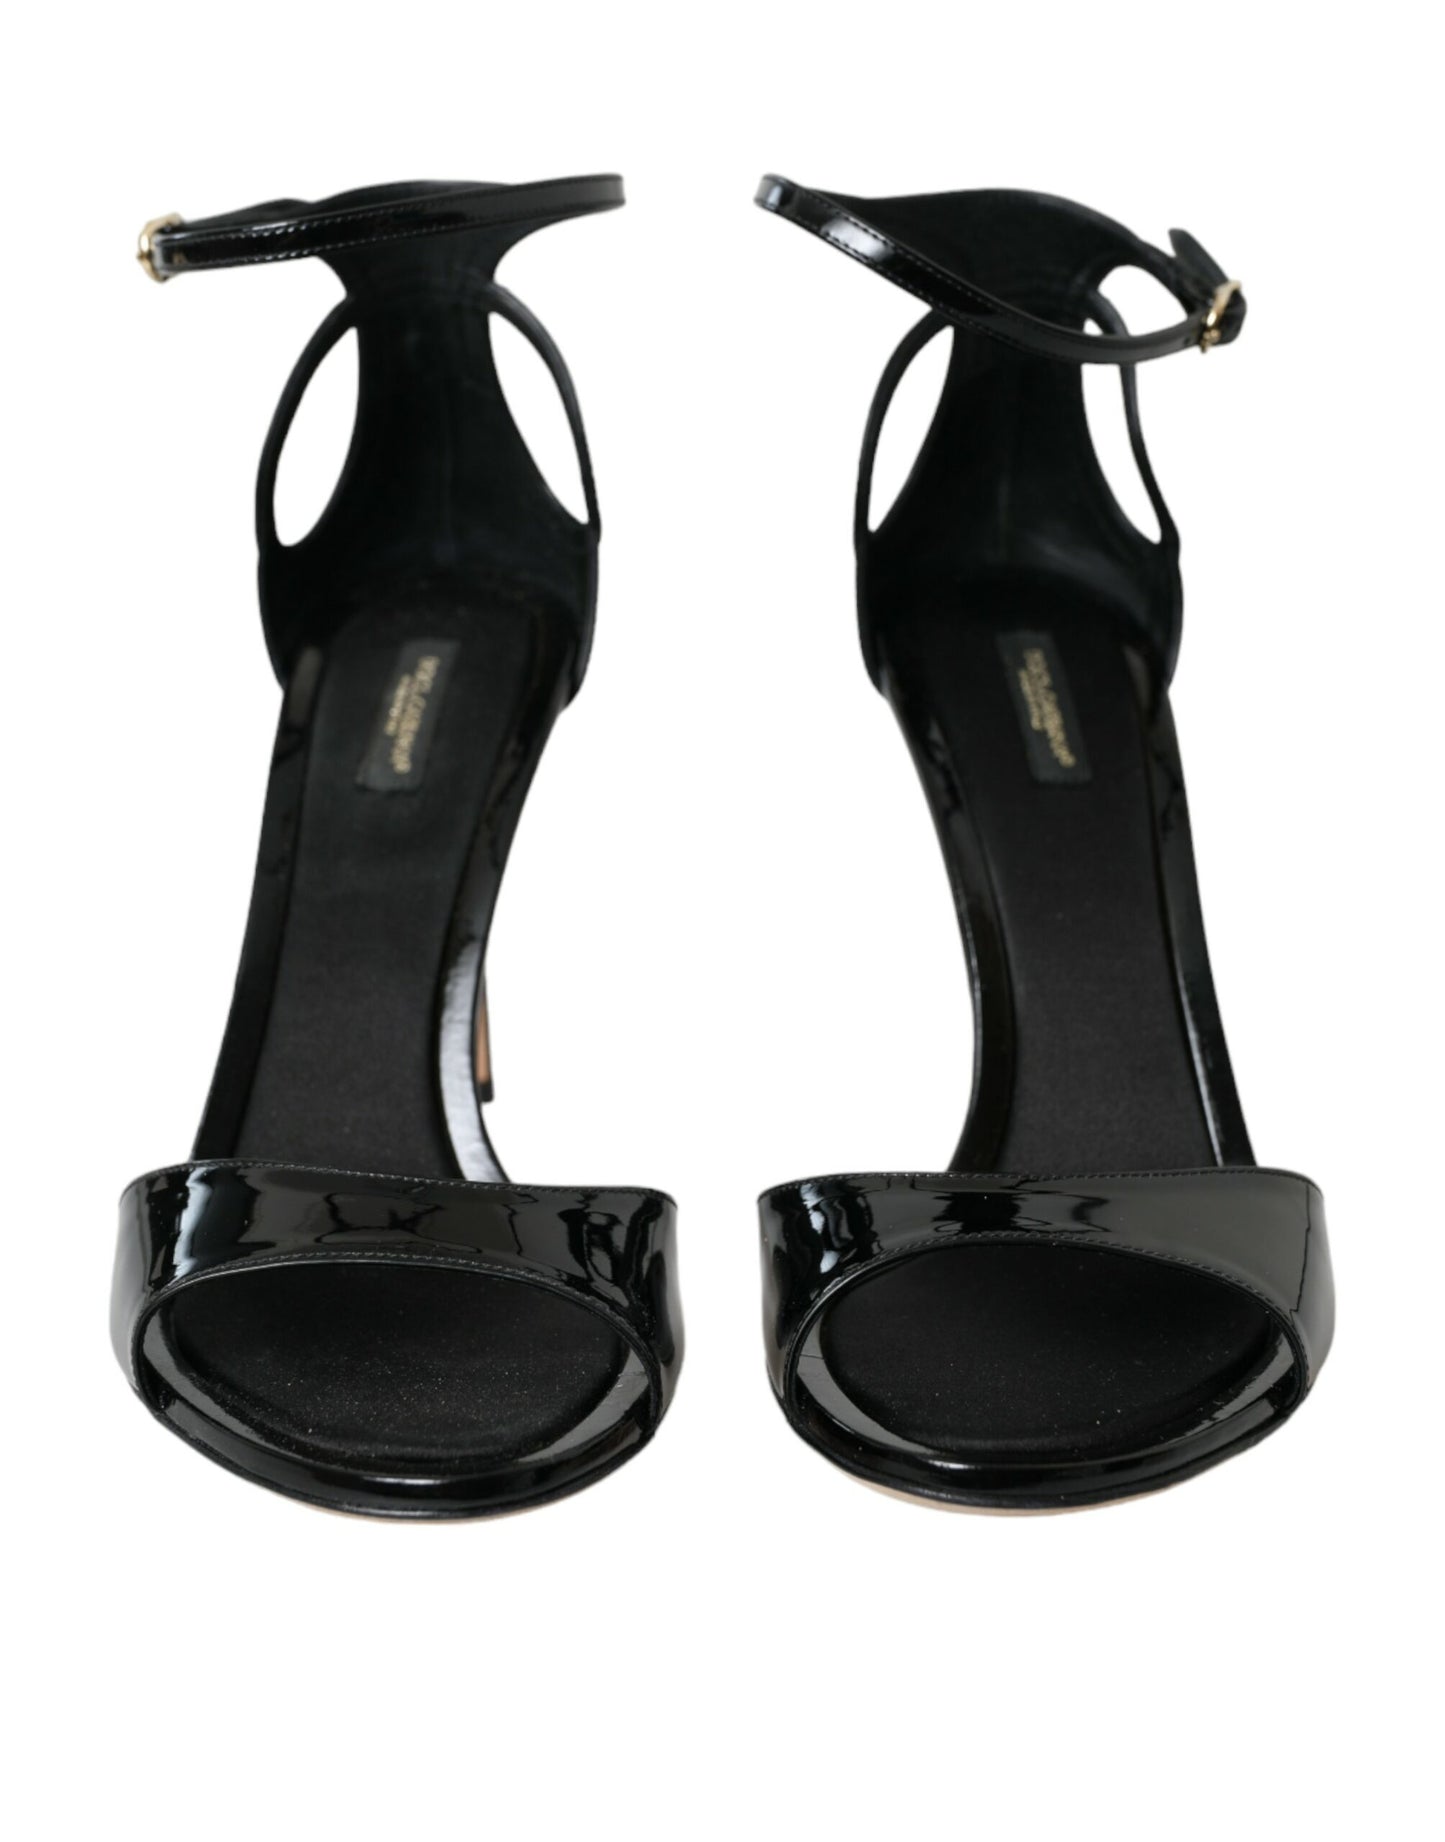 Dolce & Gabbana Black KEIRA Leather Heels Sandals Shoes